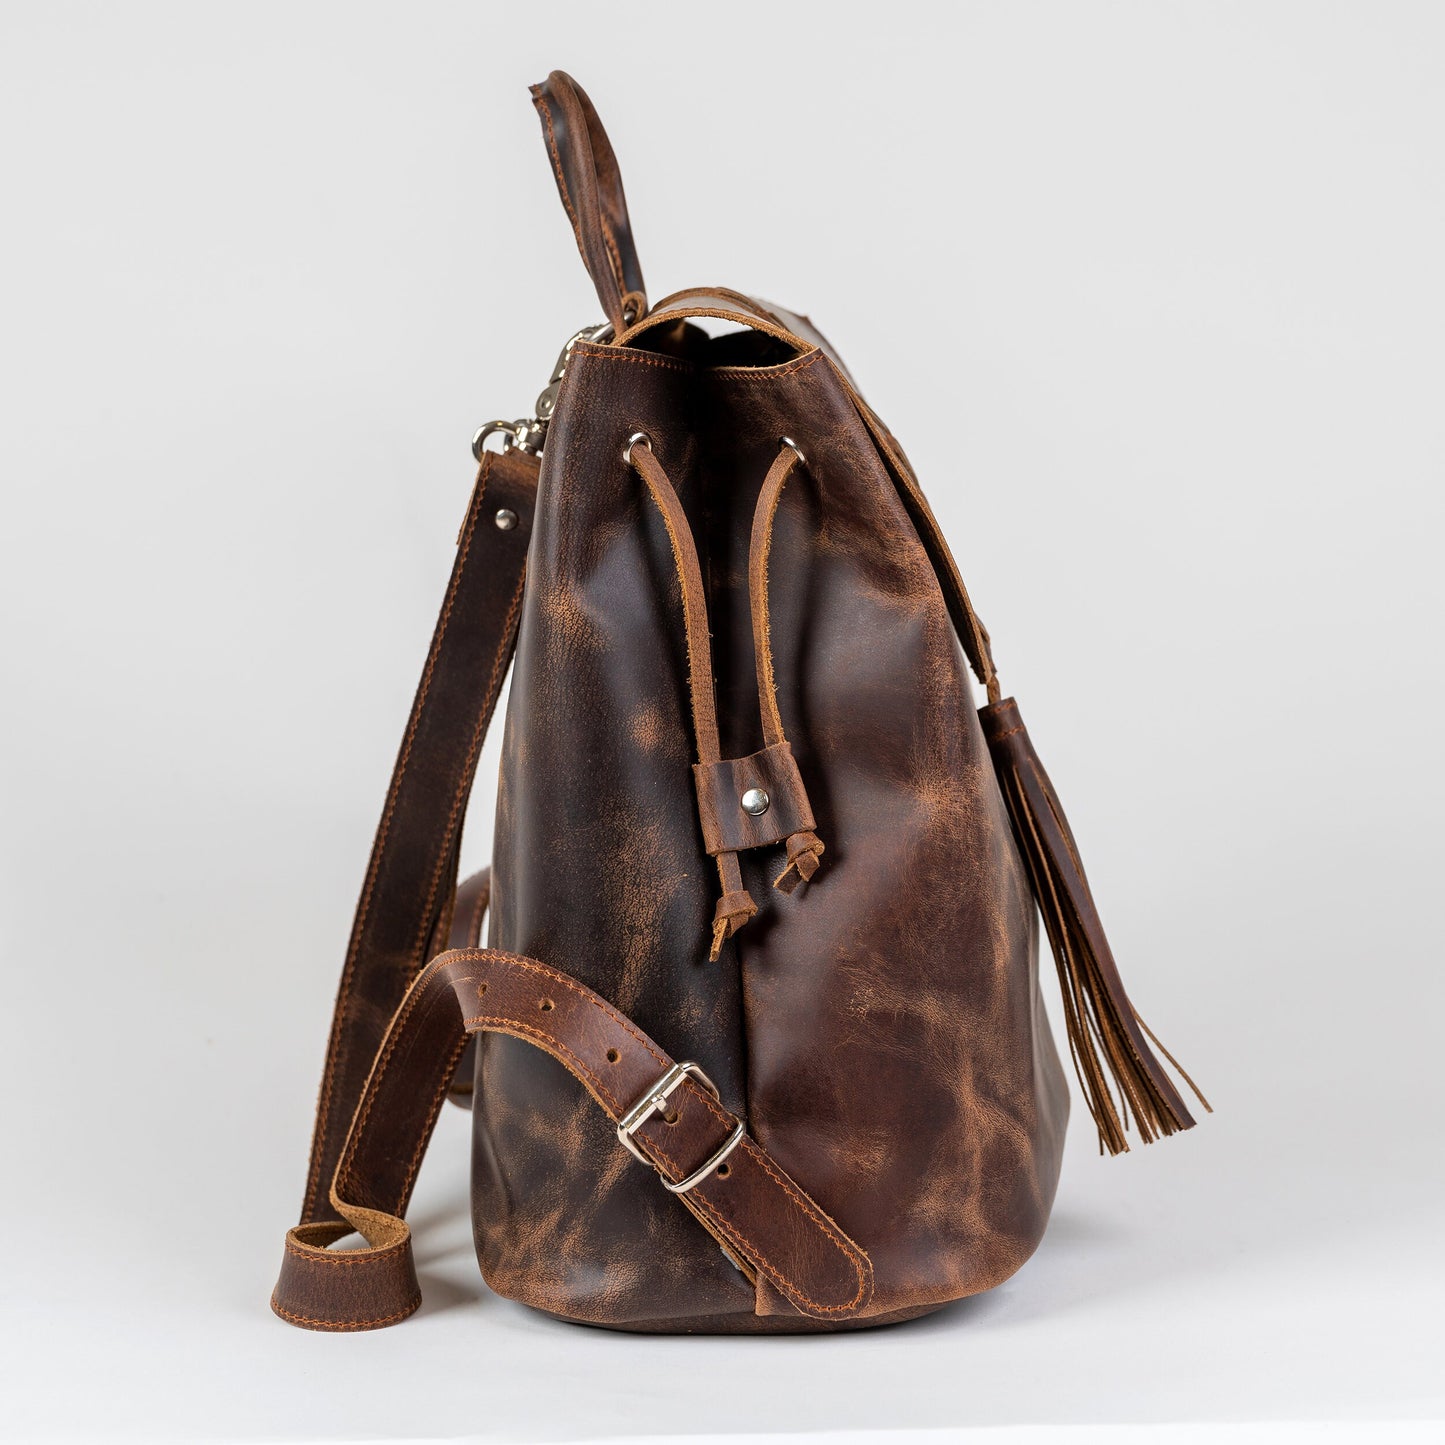 Leather women backpack, full grain leather backpack, leather gift, leather backpack purse